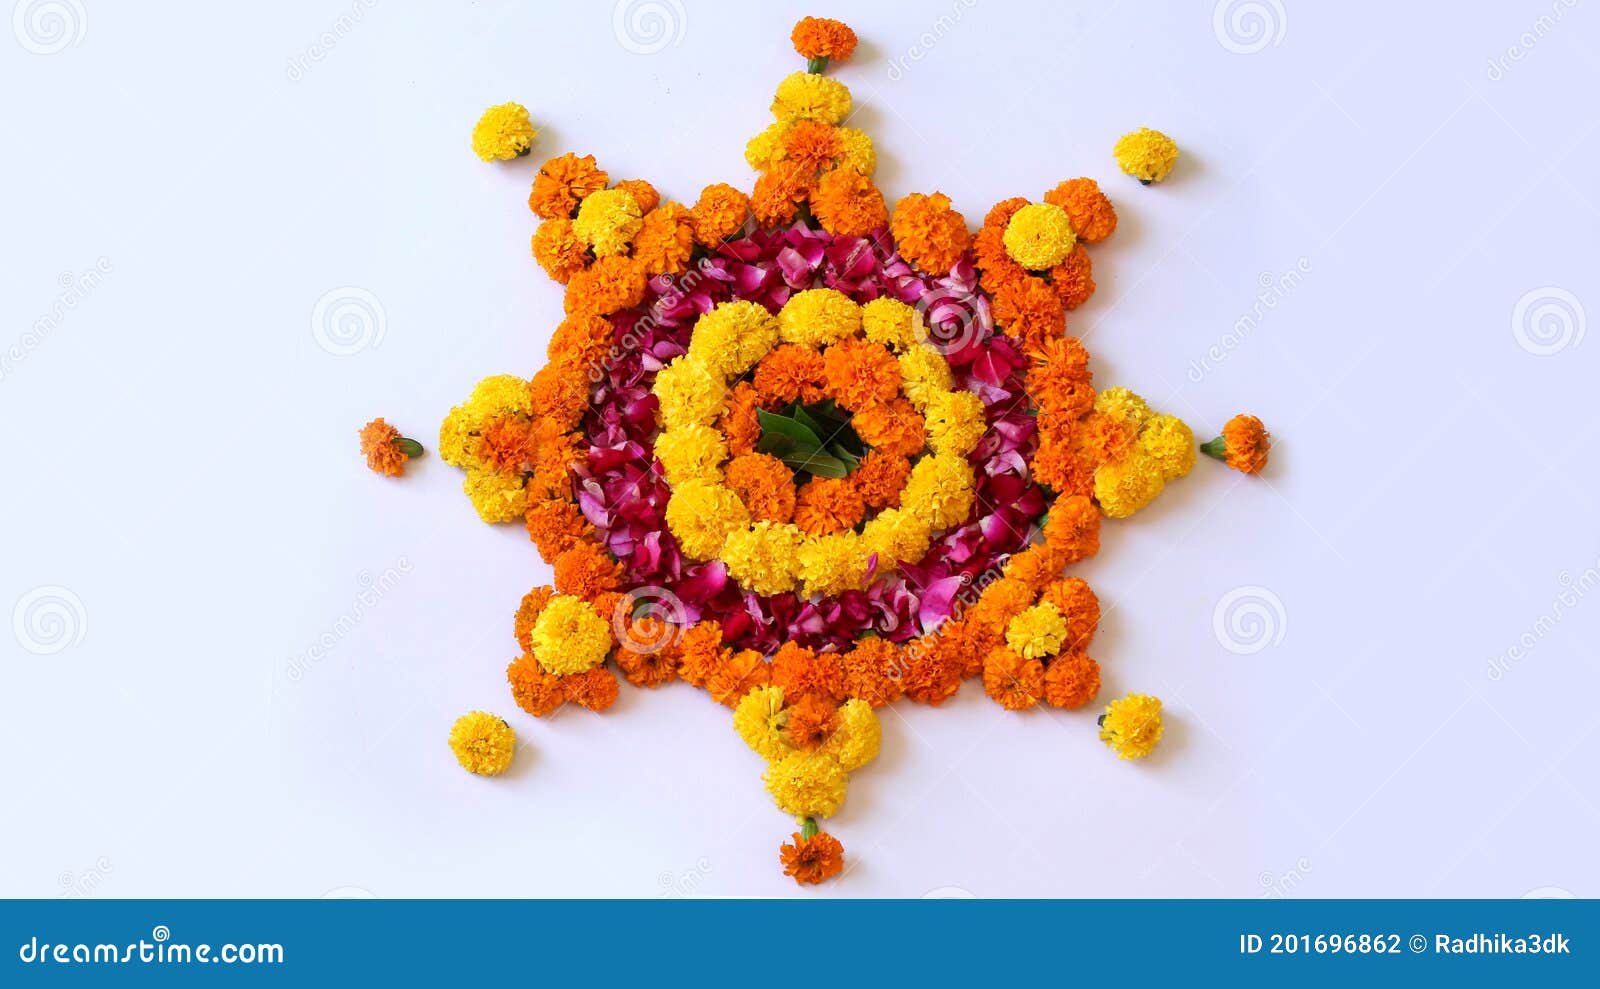 Flower Rangoli Designs Background Stock Photo - Image of diwali ...